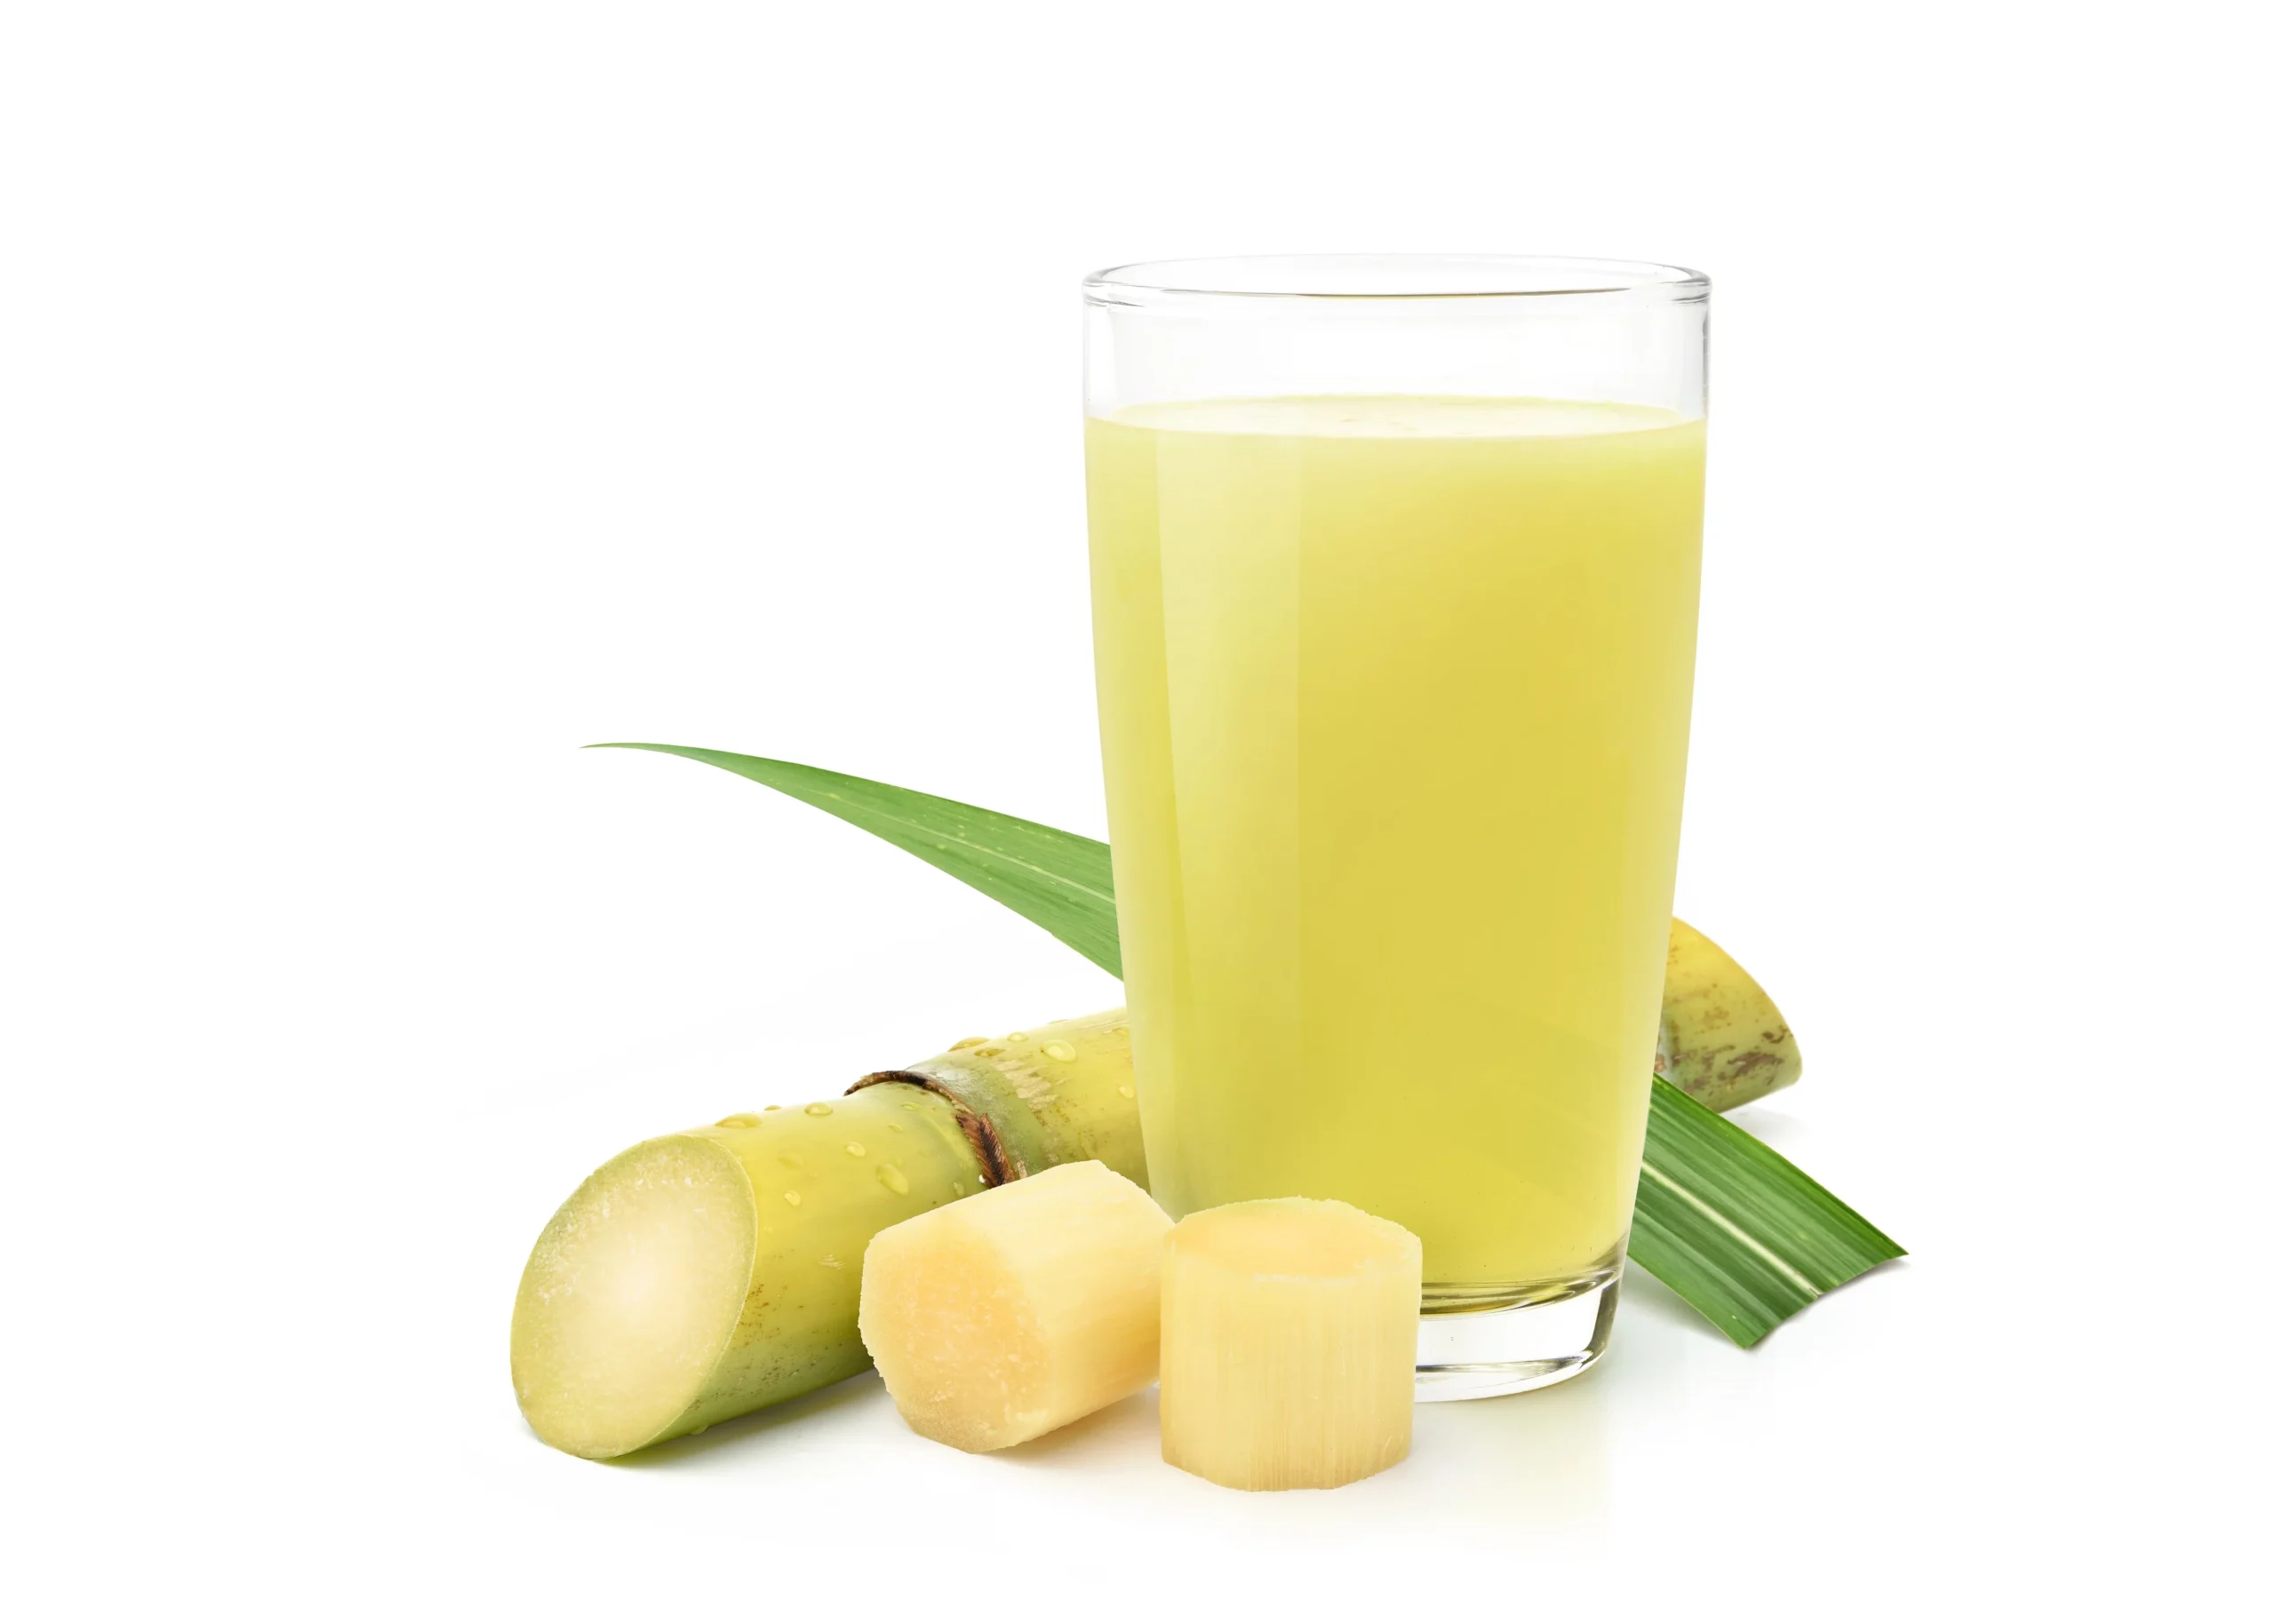 is-sugarcane-juice-good-for-weight-loss-sehatnagar-com